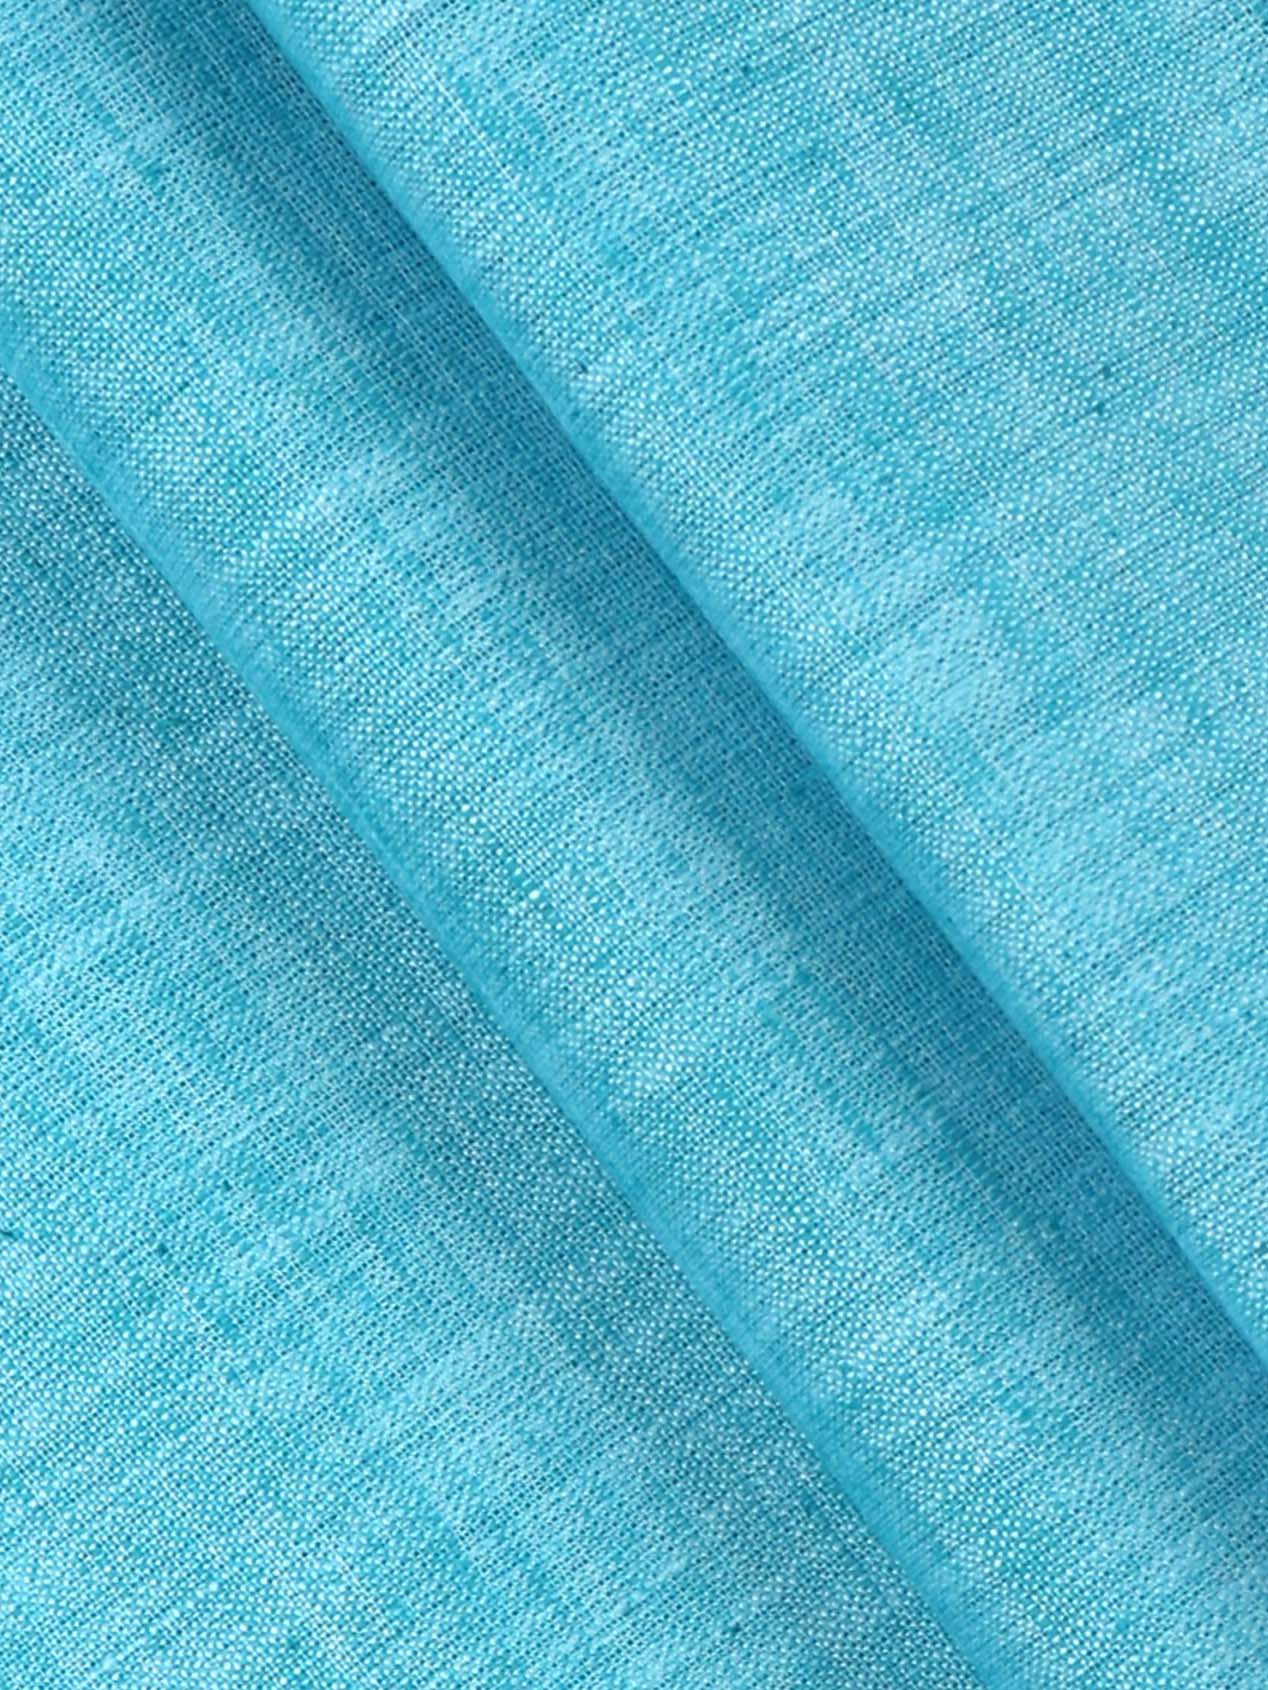 Cotton Blend Sky Blue Colour Kurtha Fabric Lampus